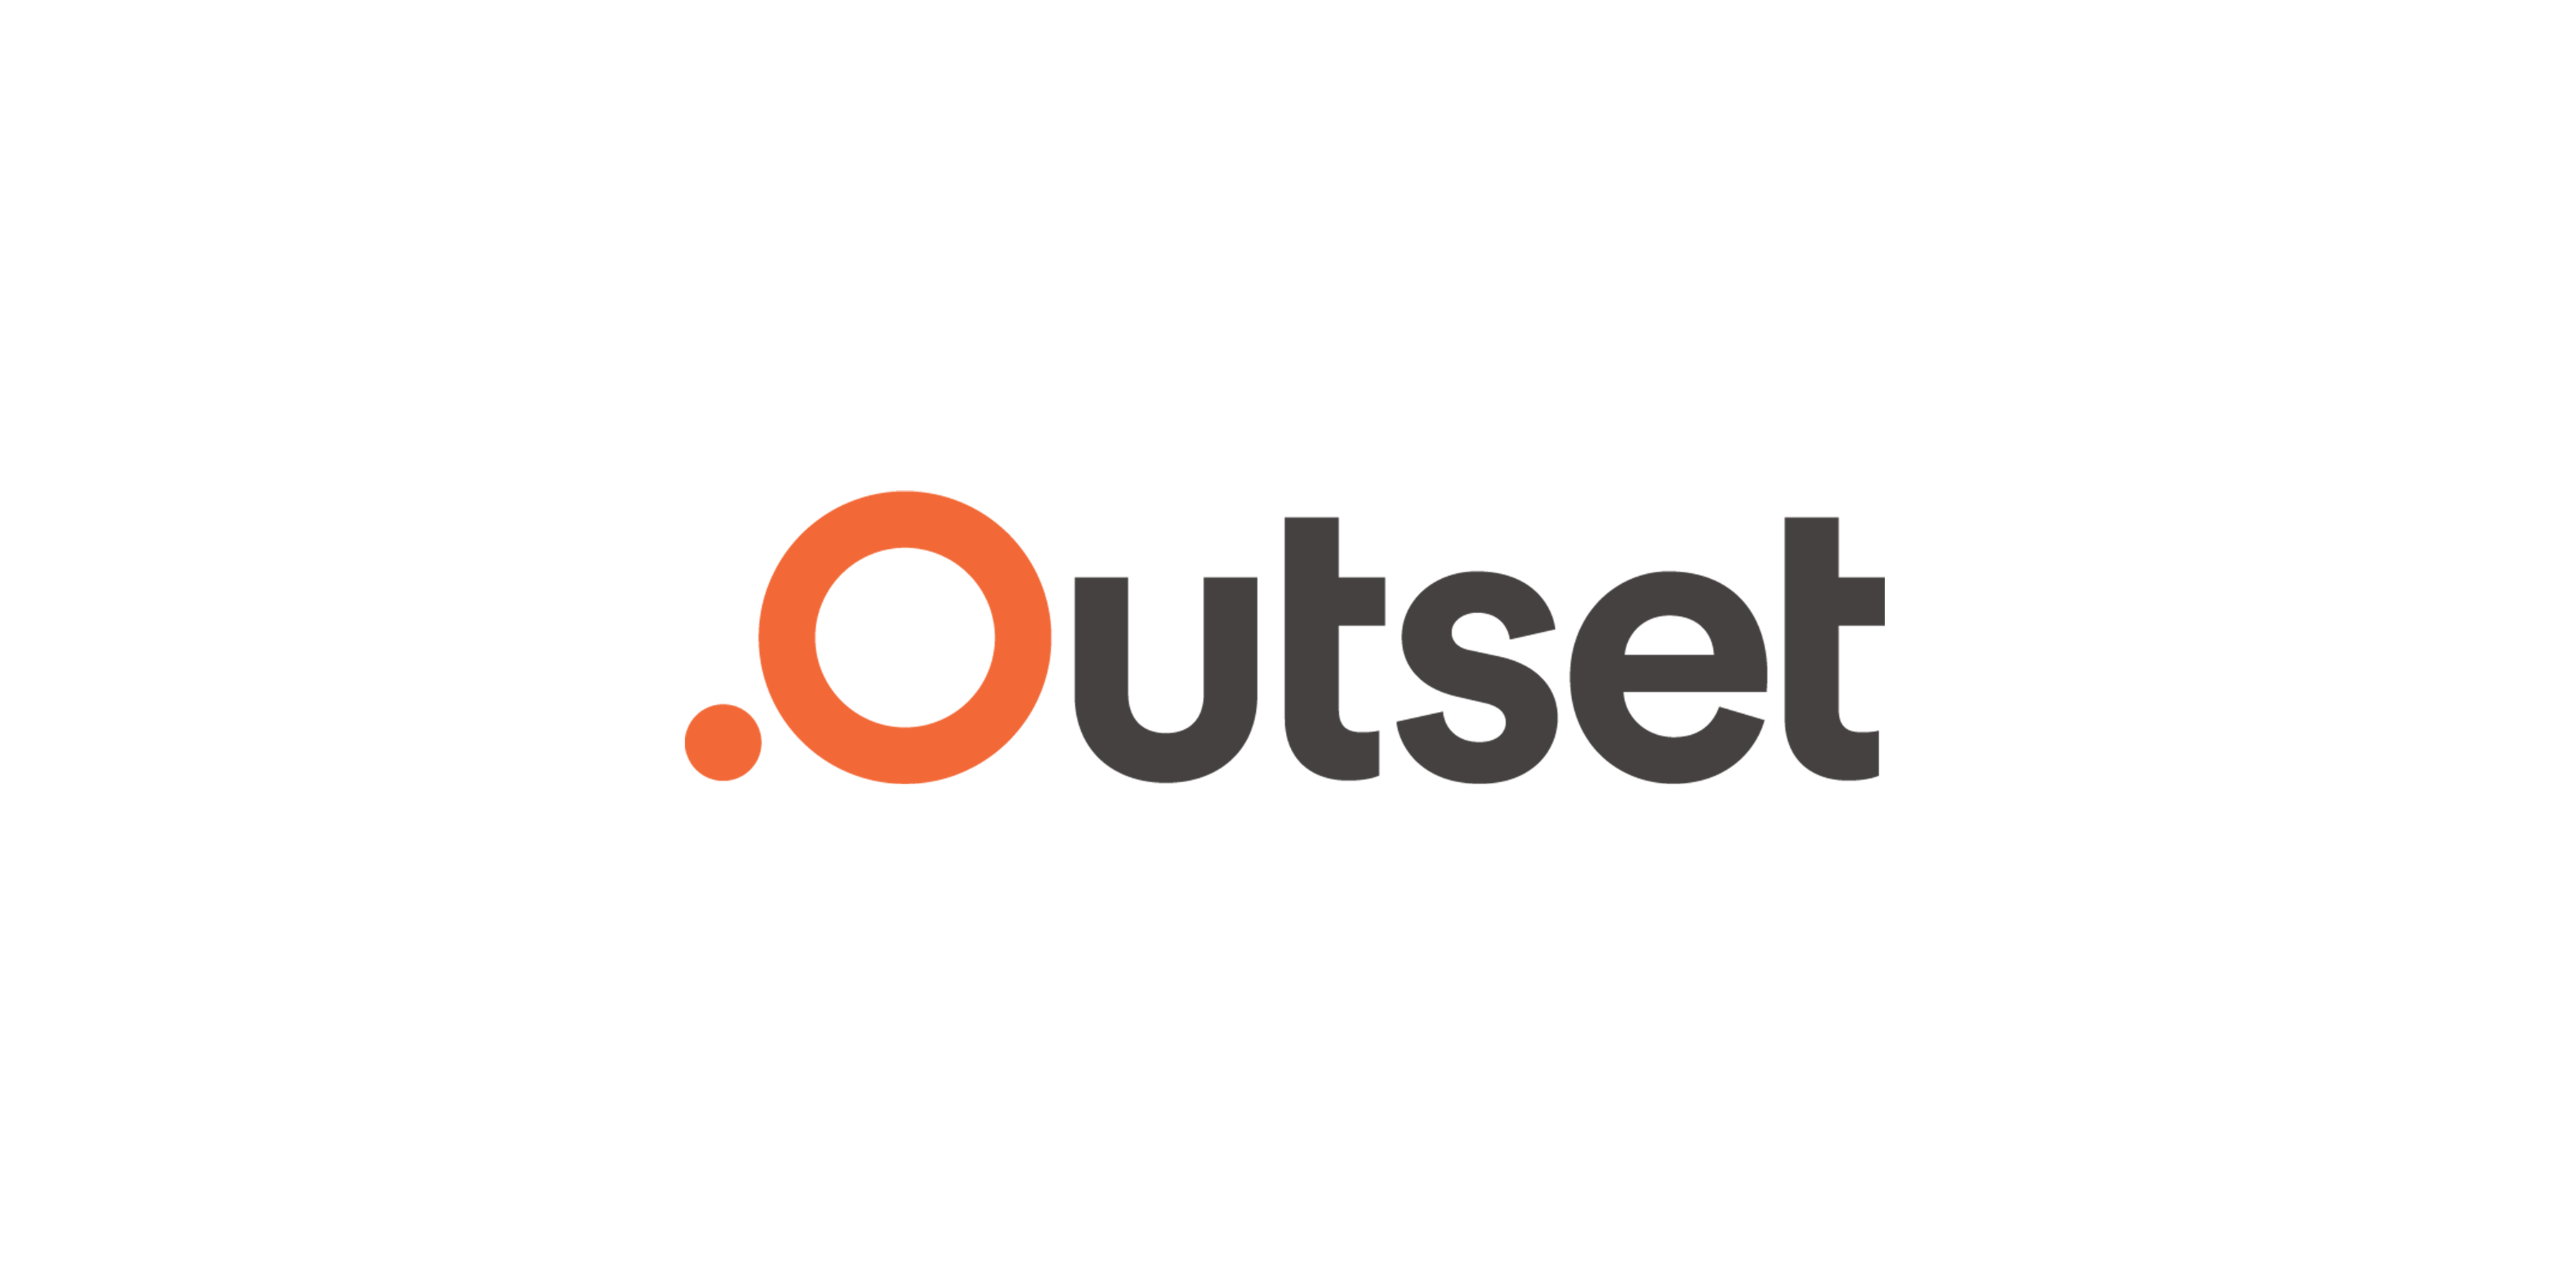 Outset Medical Logo